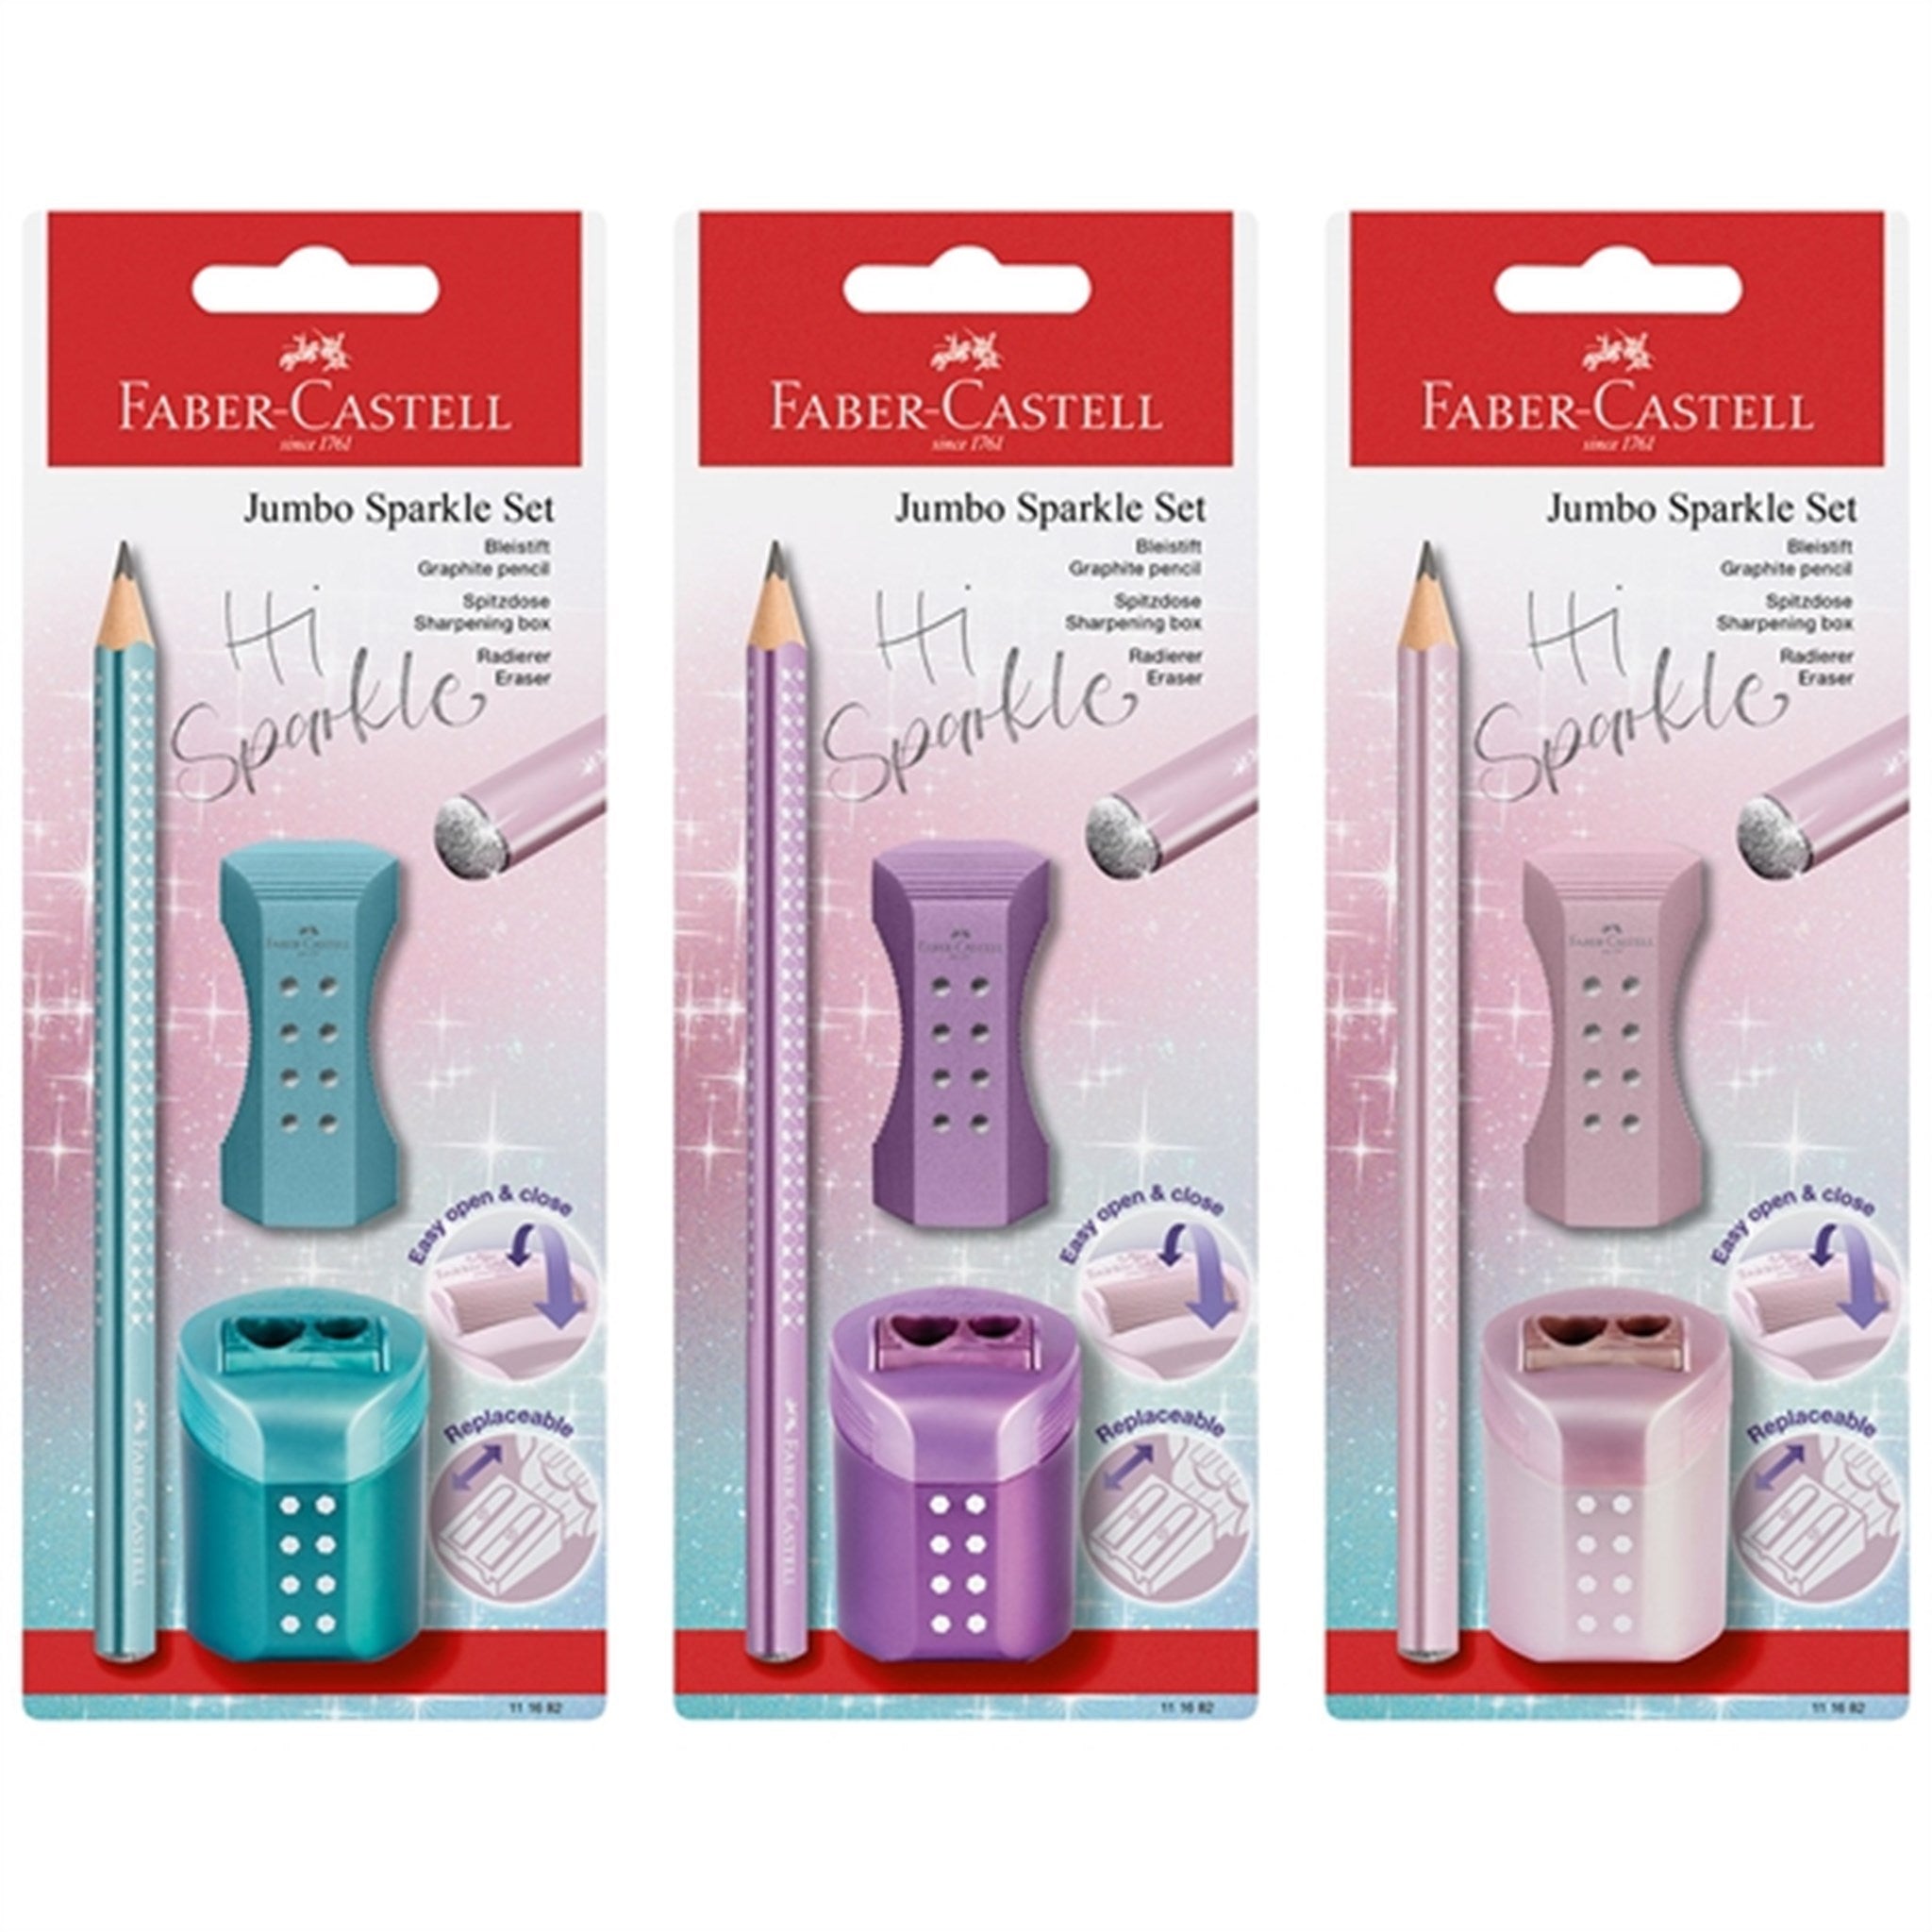 Faber-Castell Sparkle Jumbo Pencil, Eraser, Pencil Sharpener - Rosa 2